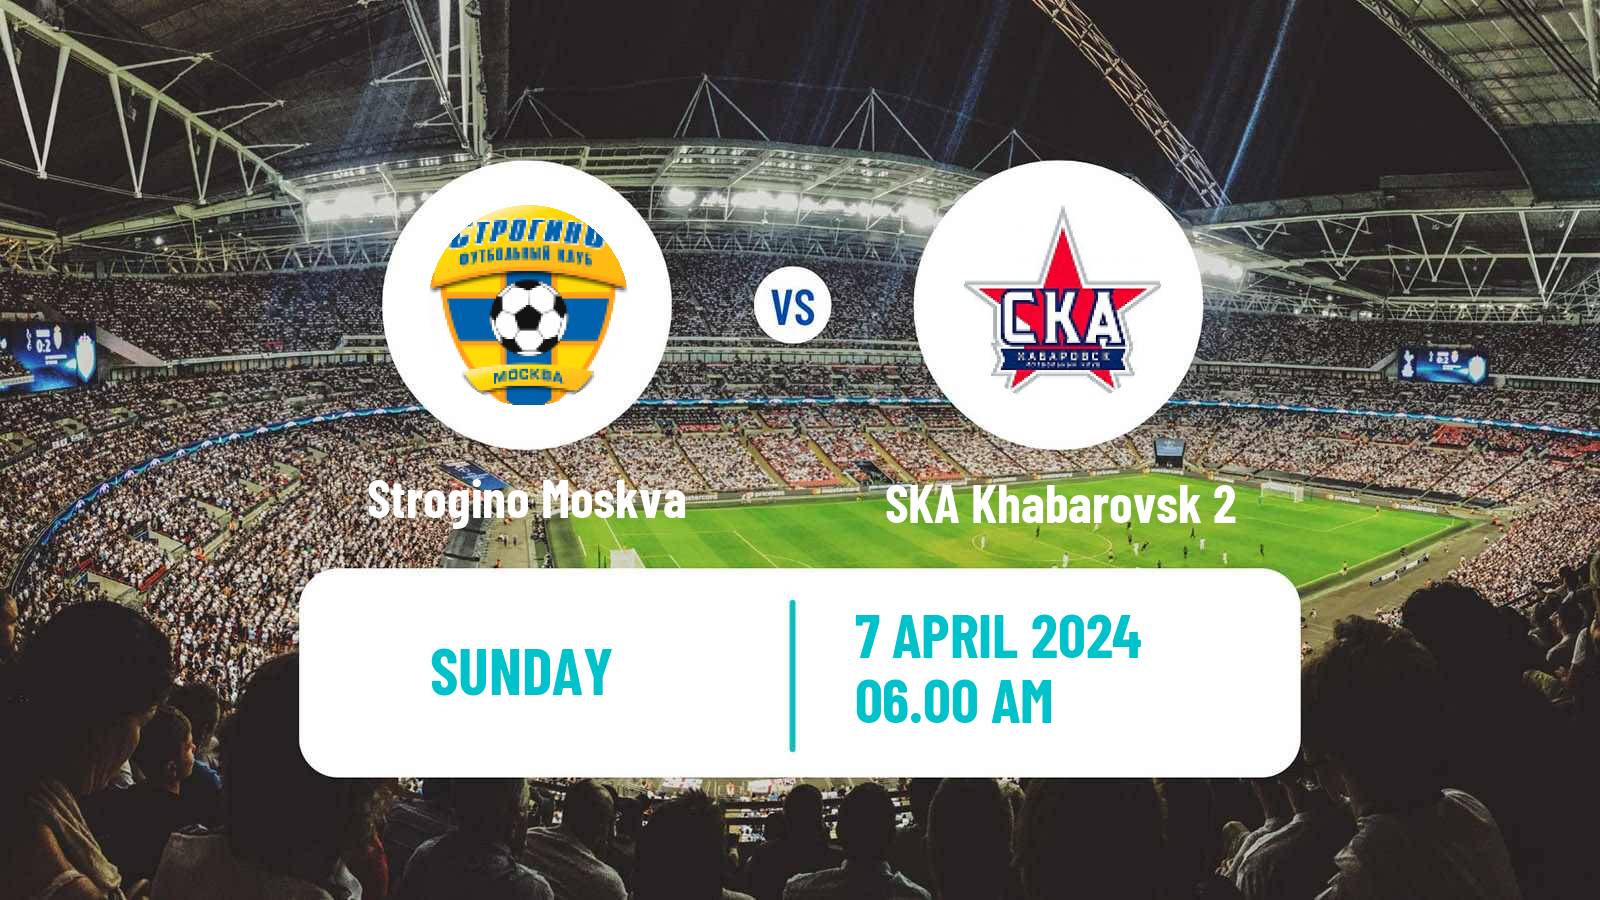 Soccer FNL 2 Division B Group 3 Strogino Moskva - SKA Khabarovsk 2